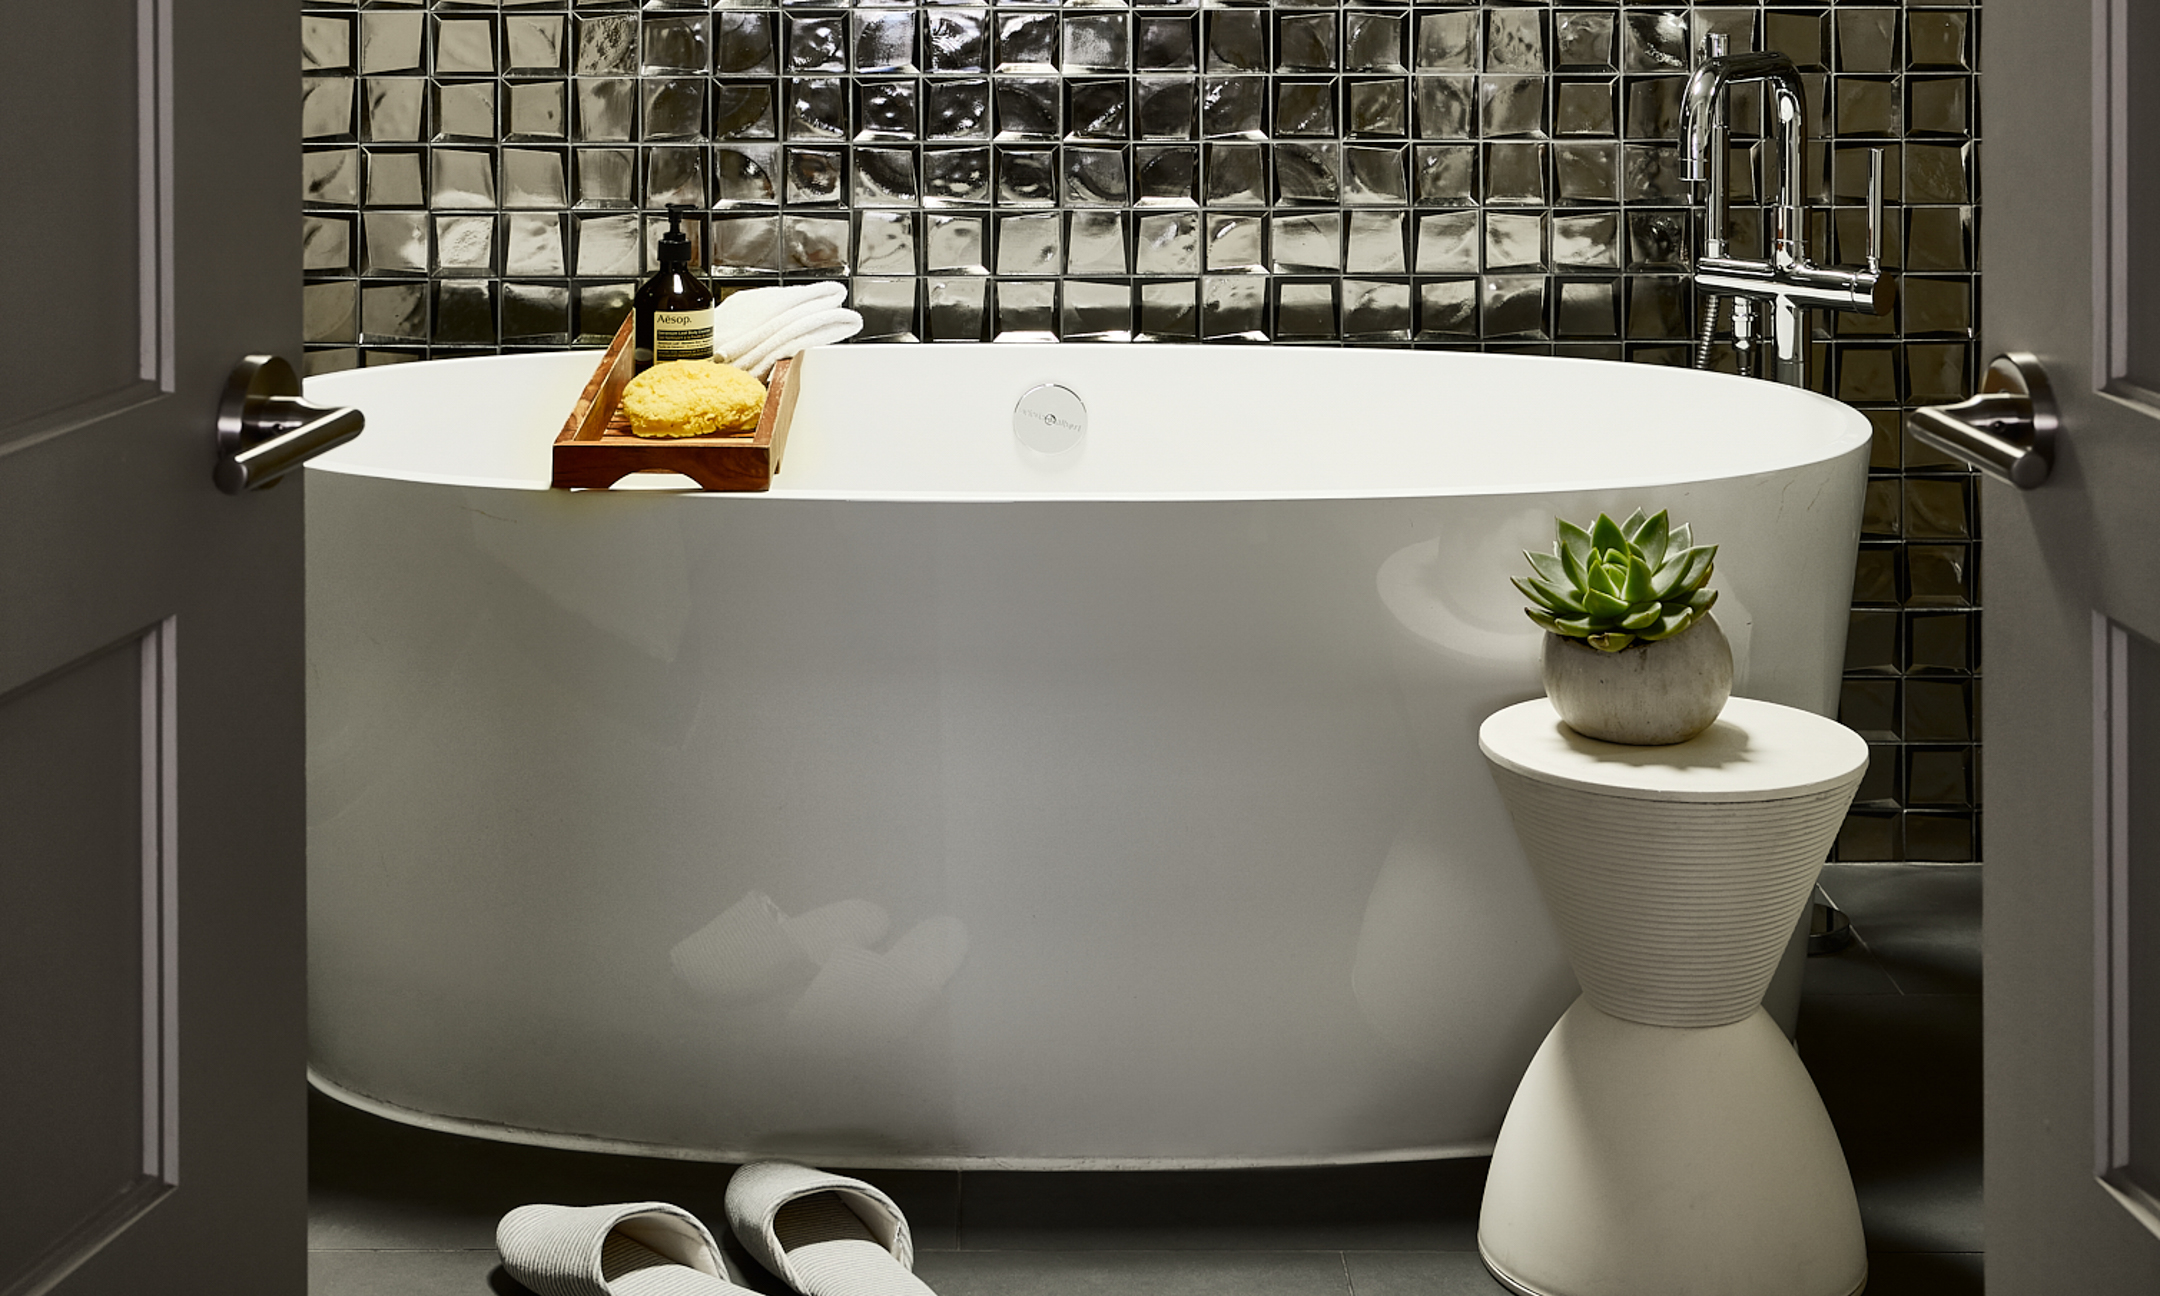 Metallic tiled bathroom with oversized soaking tub and white flip flops.